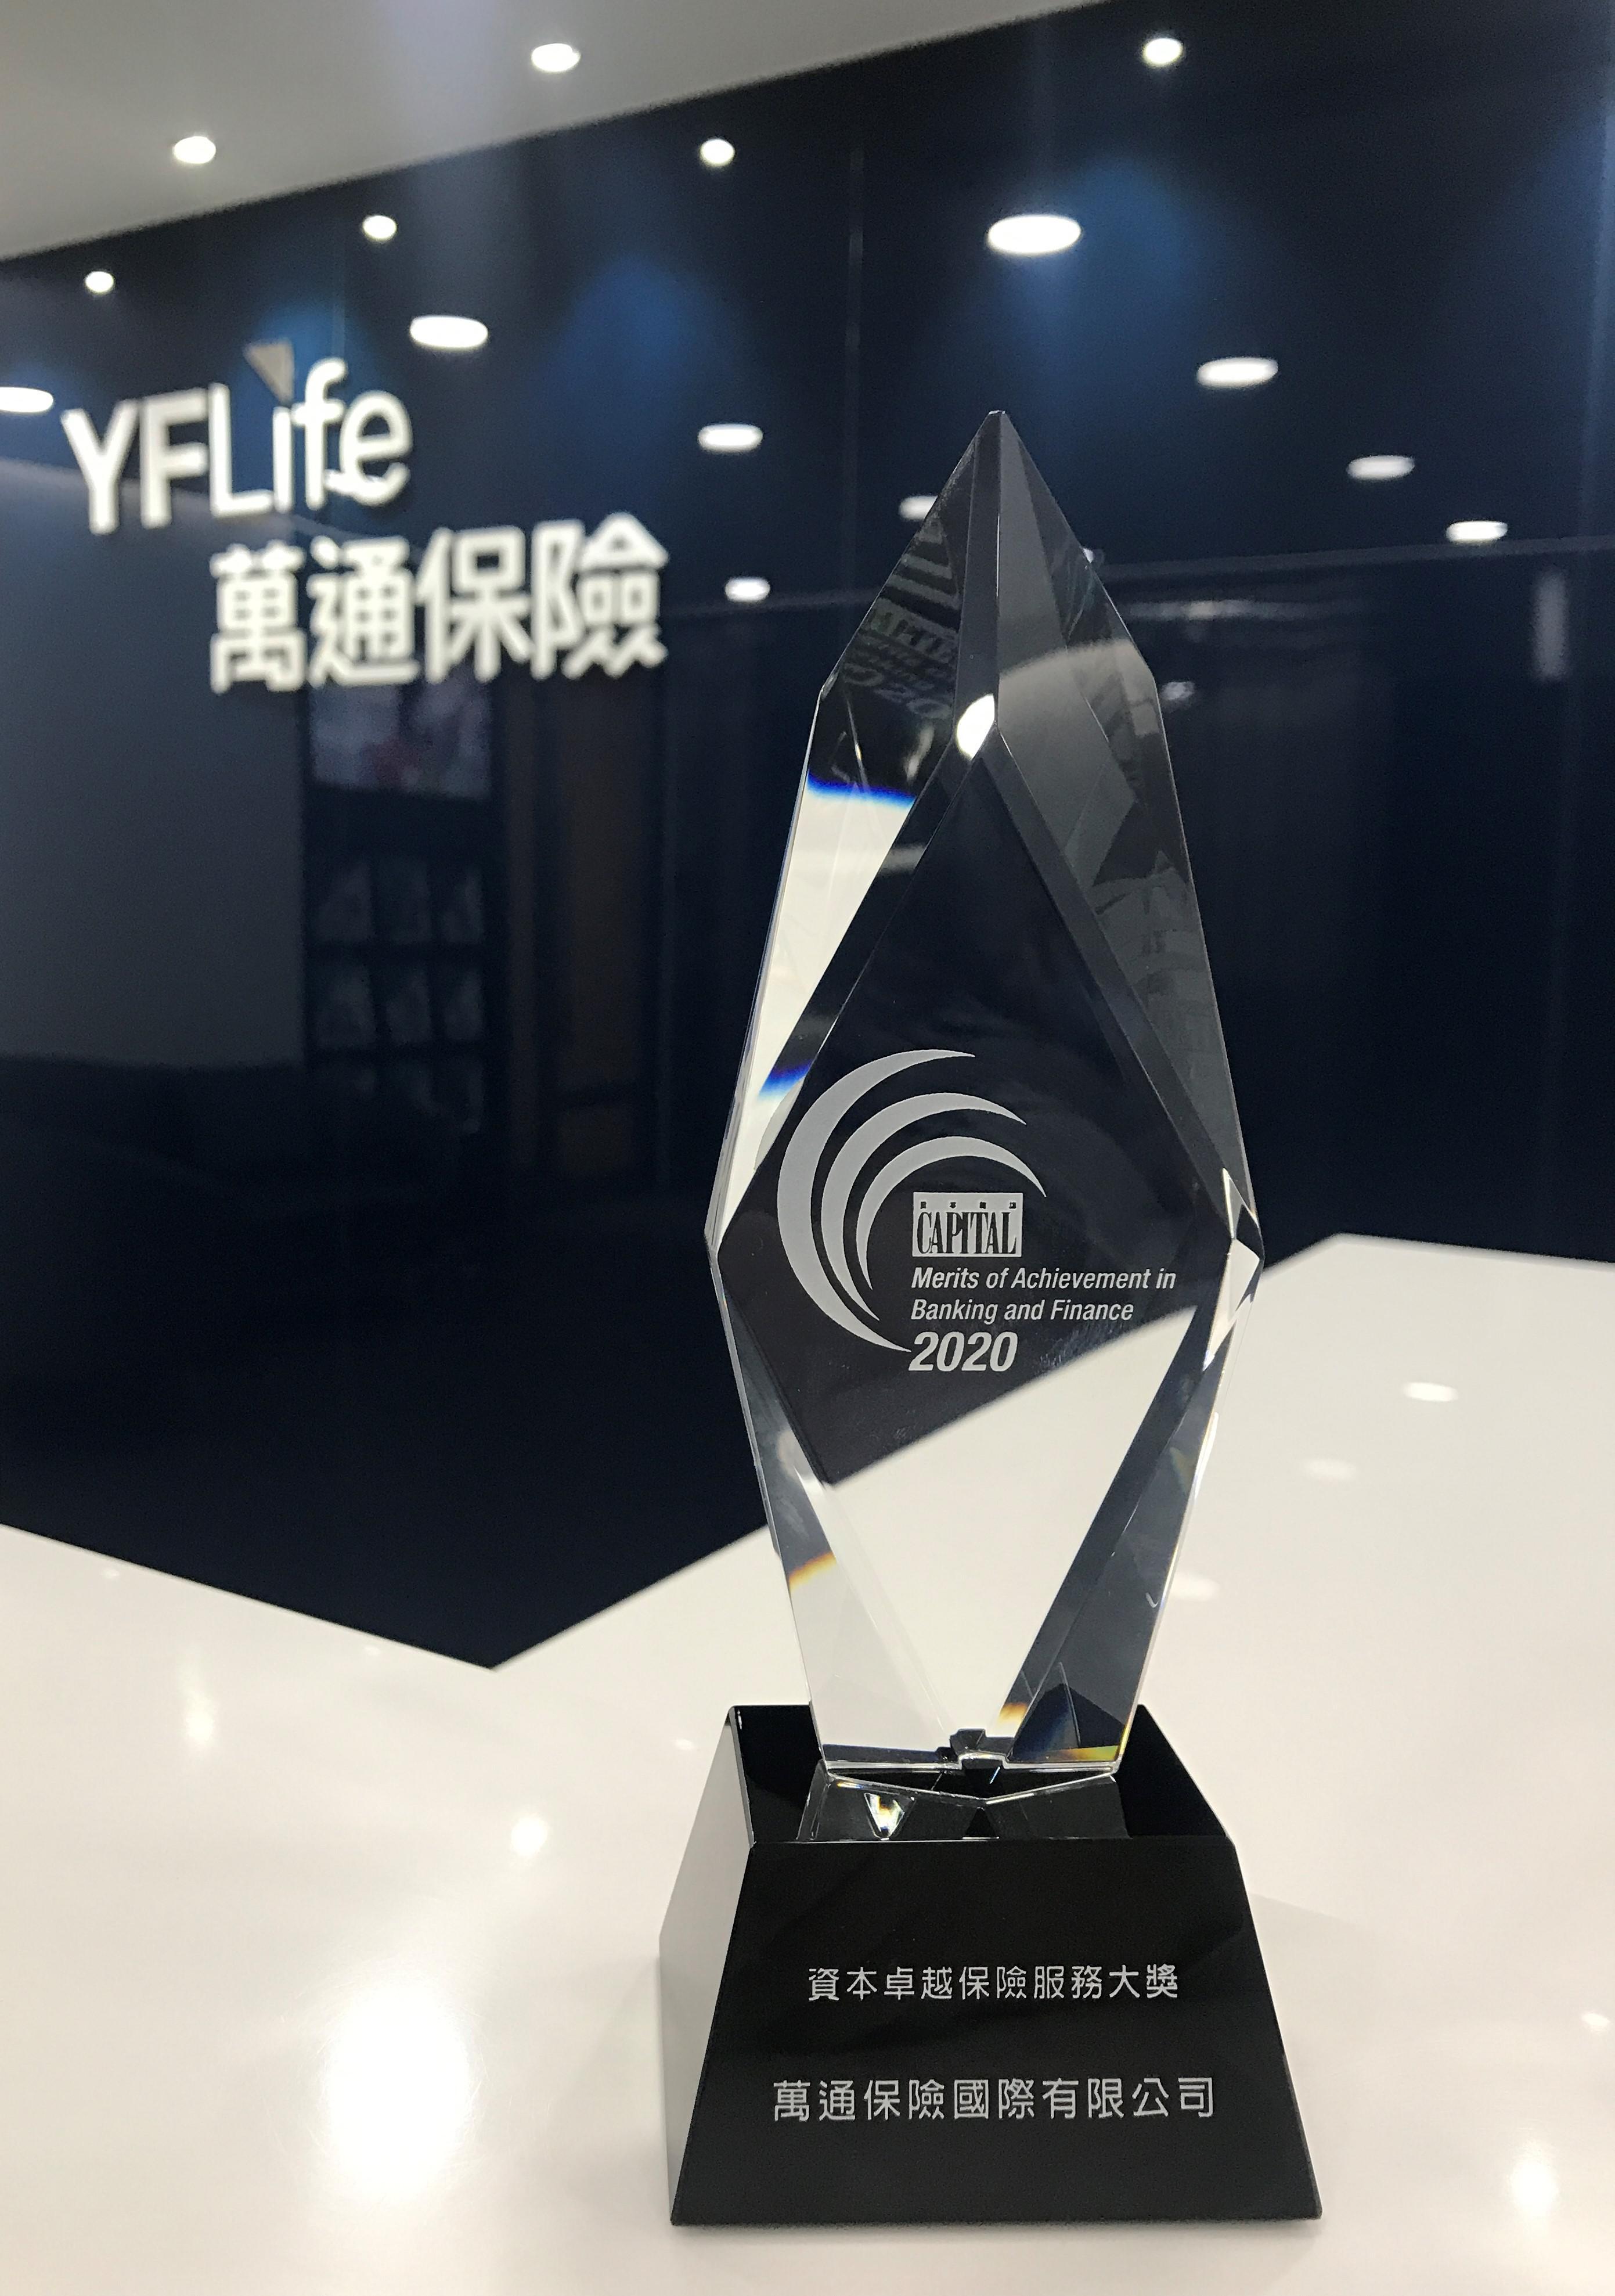 YF Life won “Best in Insurance” nine years in a row.